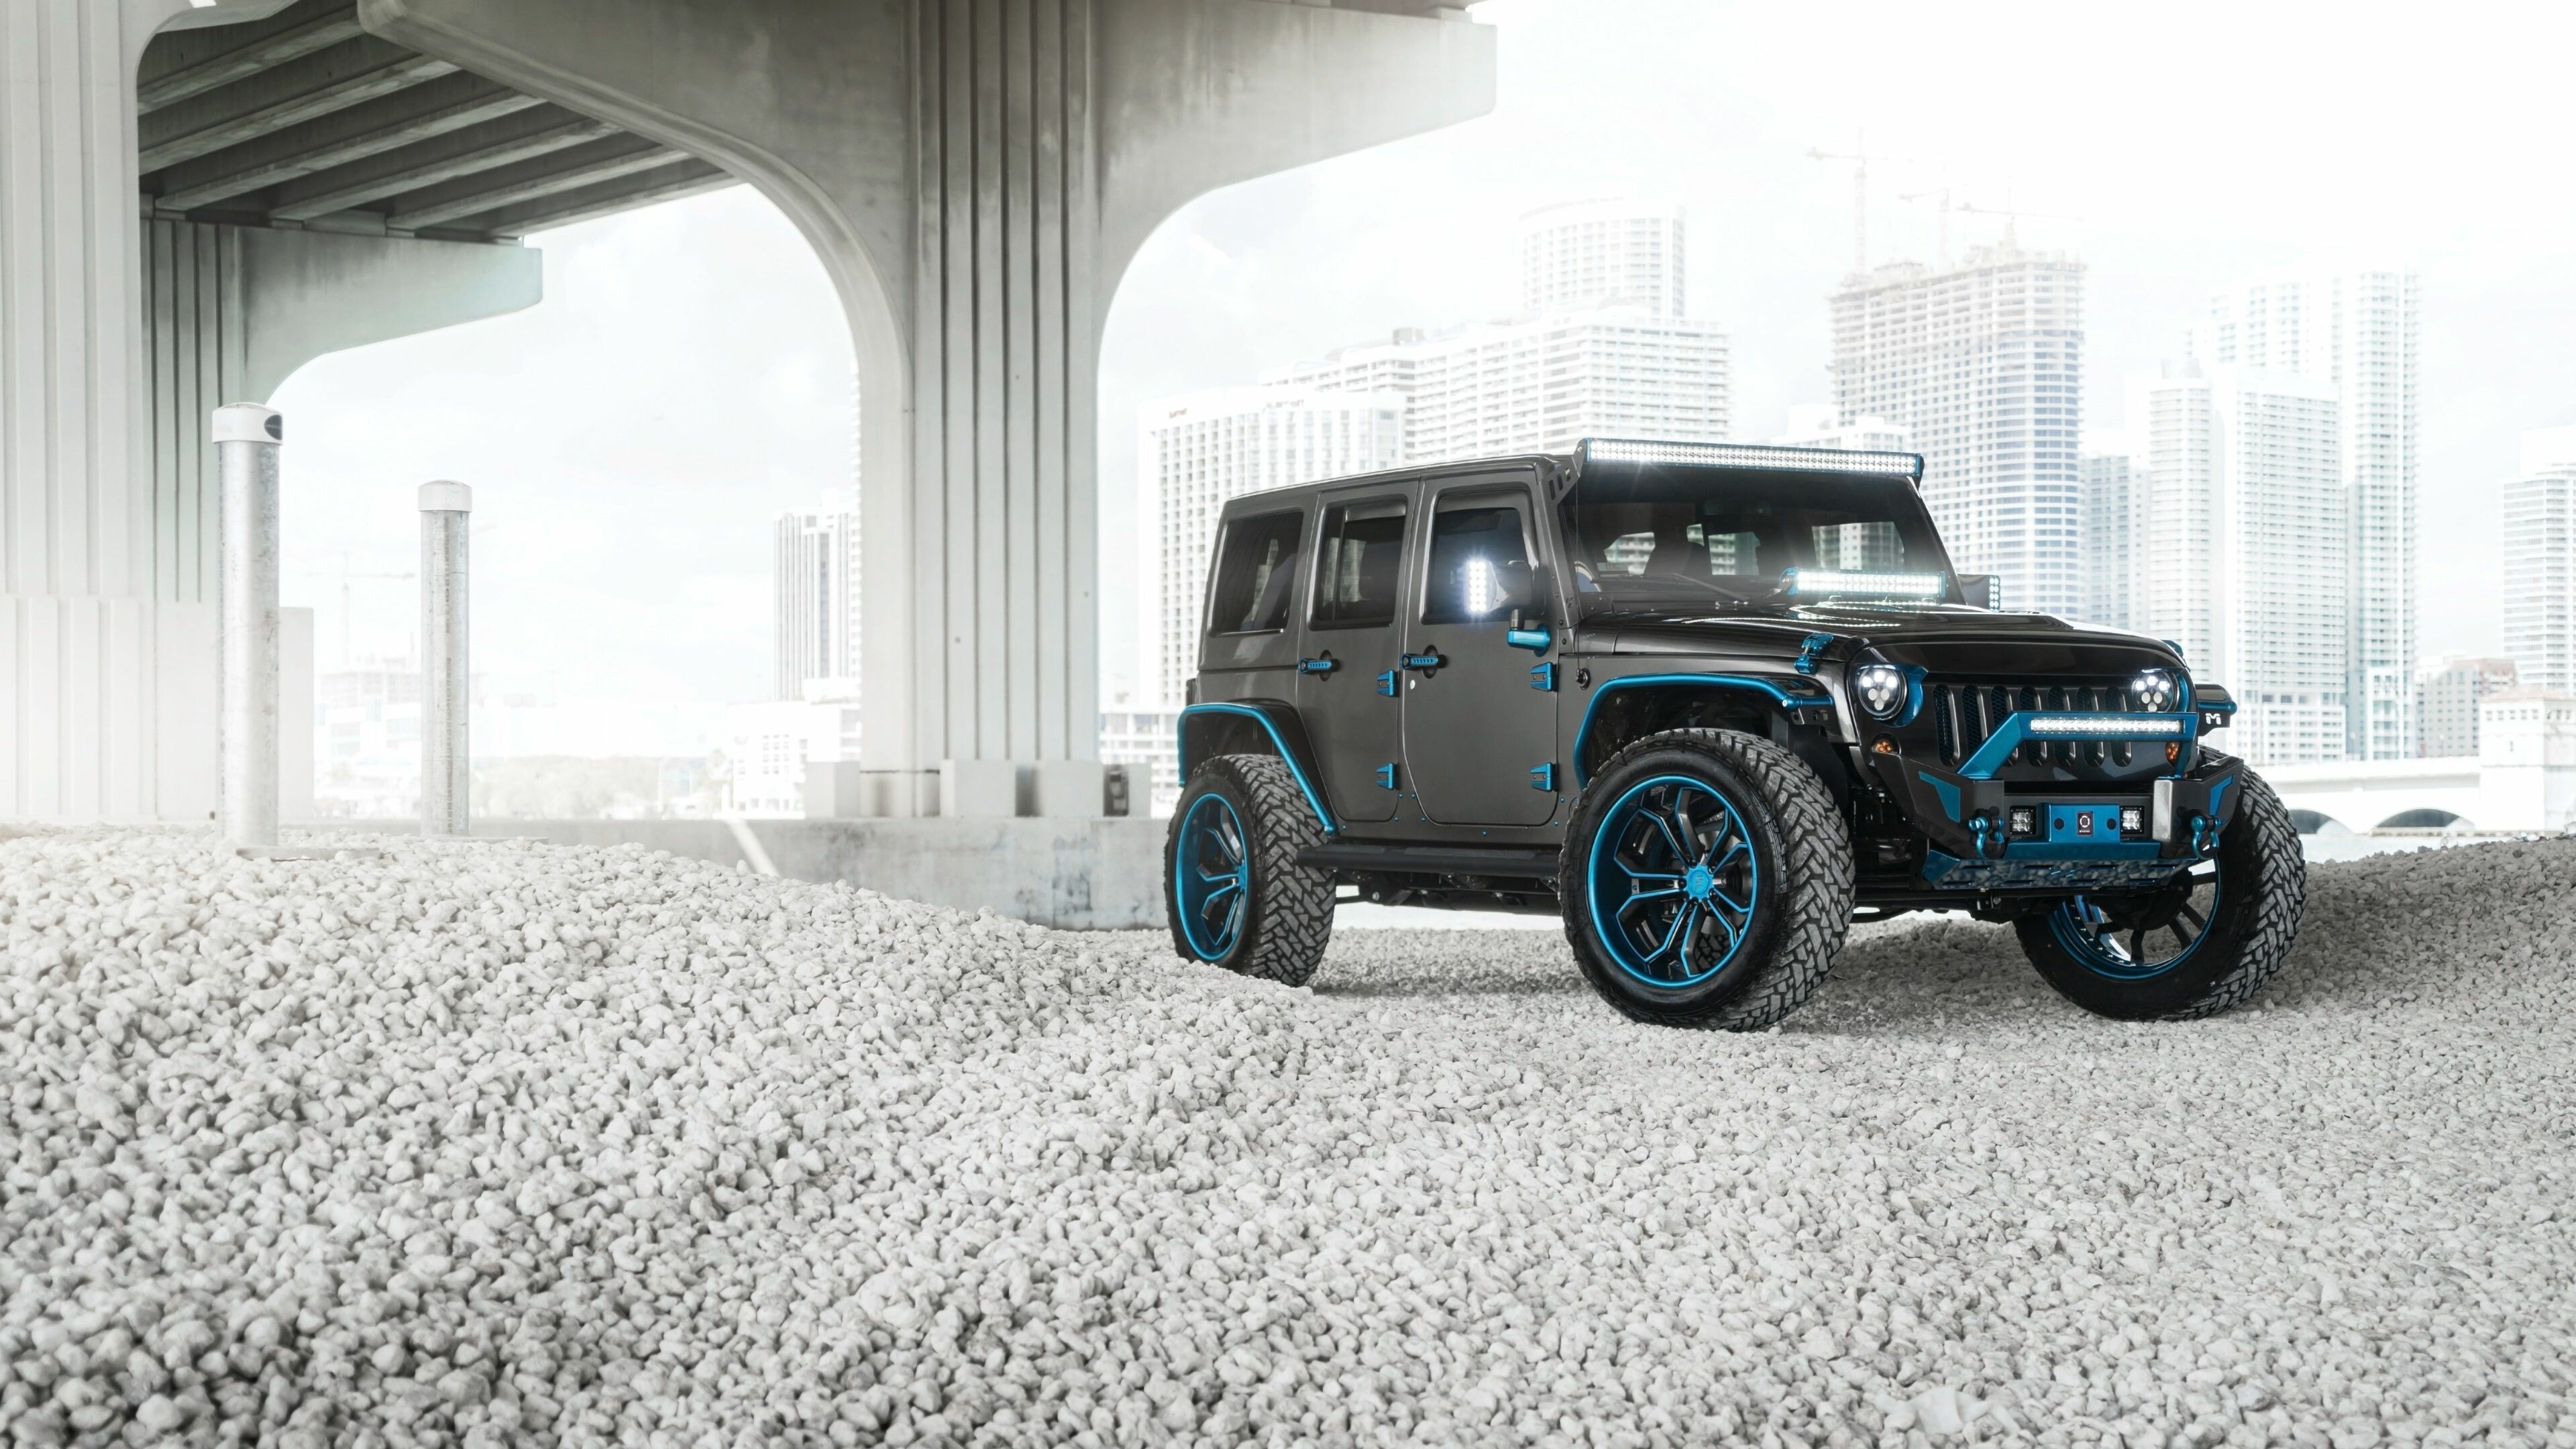 Jeep: The 2020 Wrangler, A modern SUV. 3840x2160 4K Wallpaper.